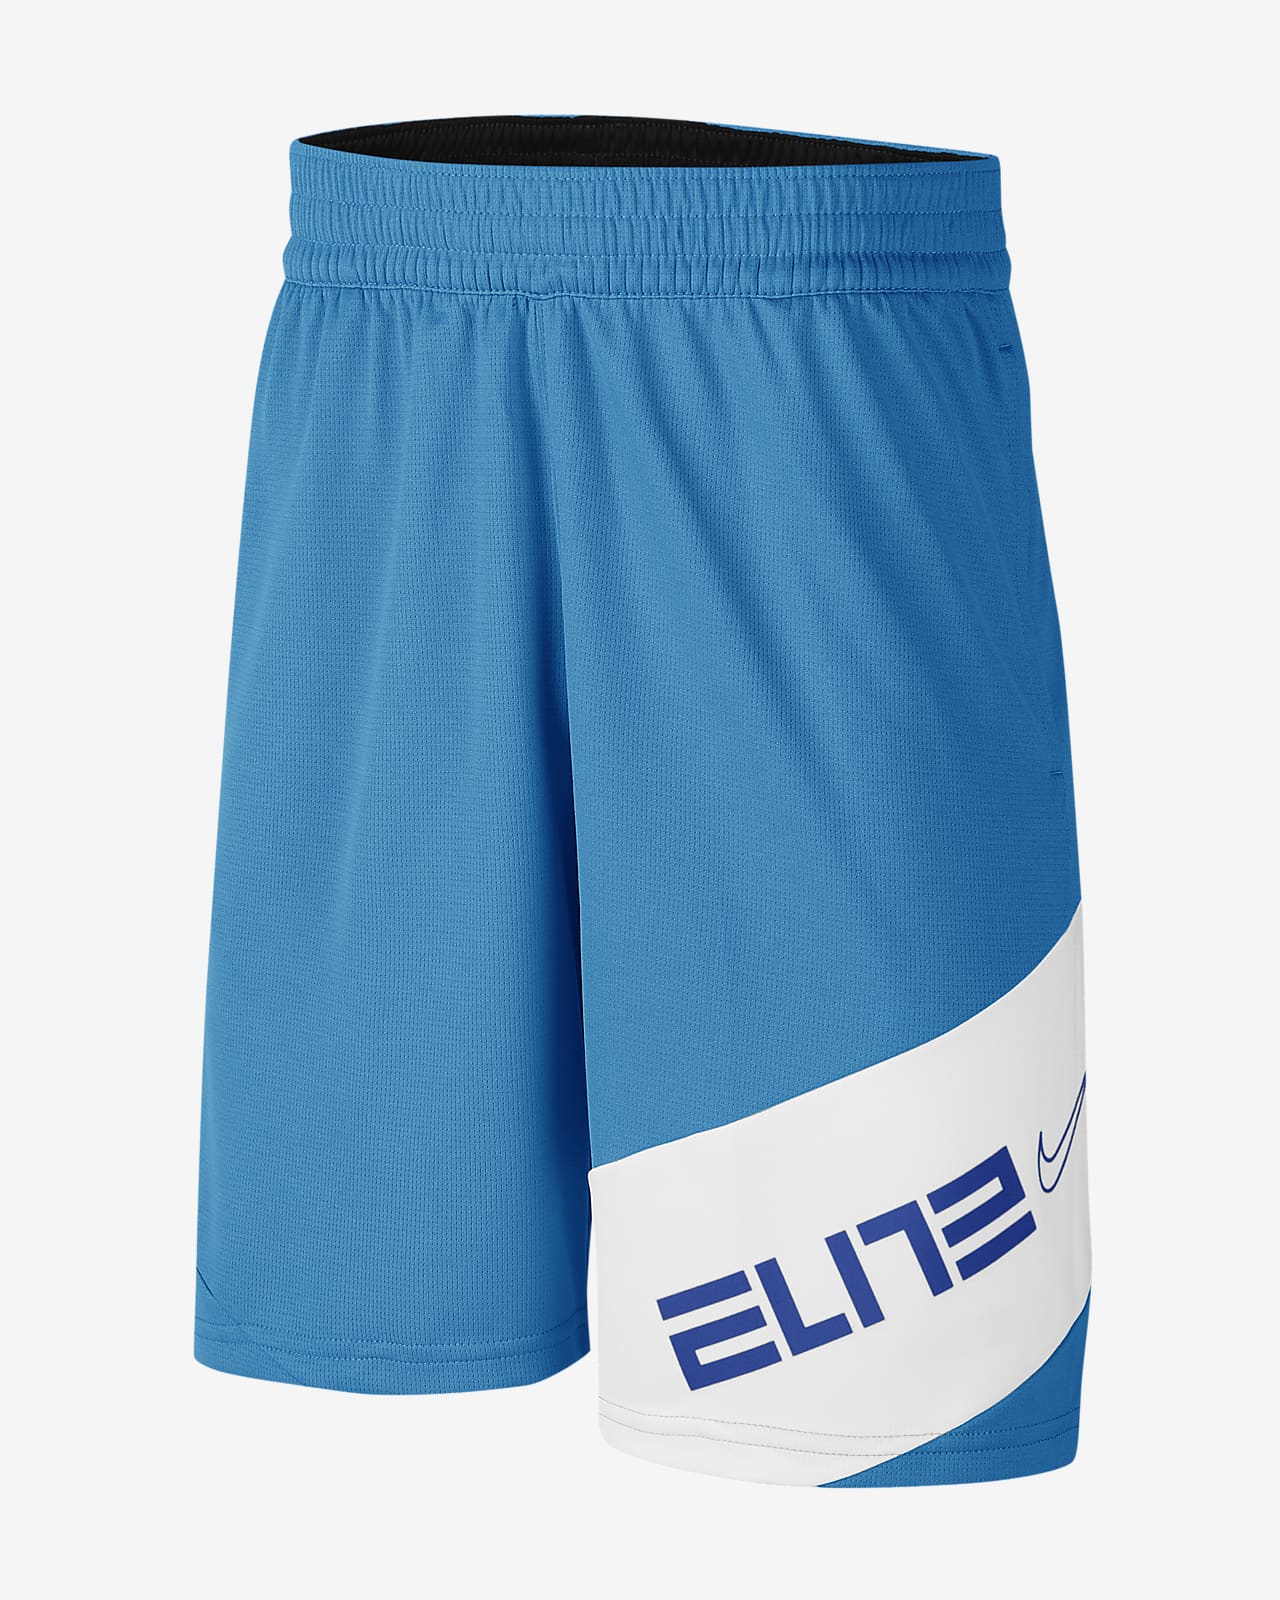 nike elite shorts boys